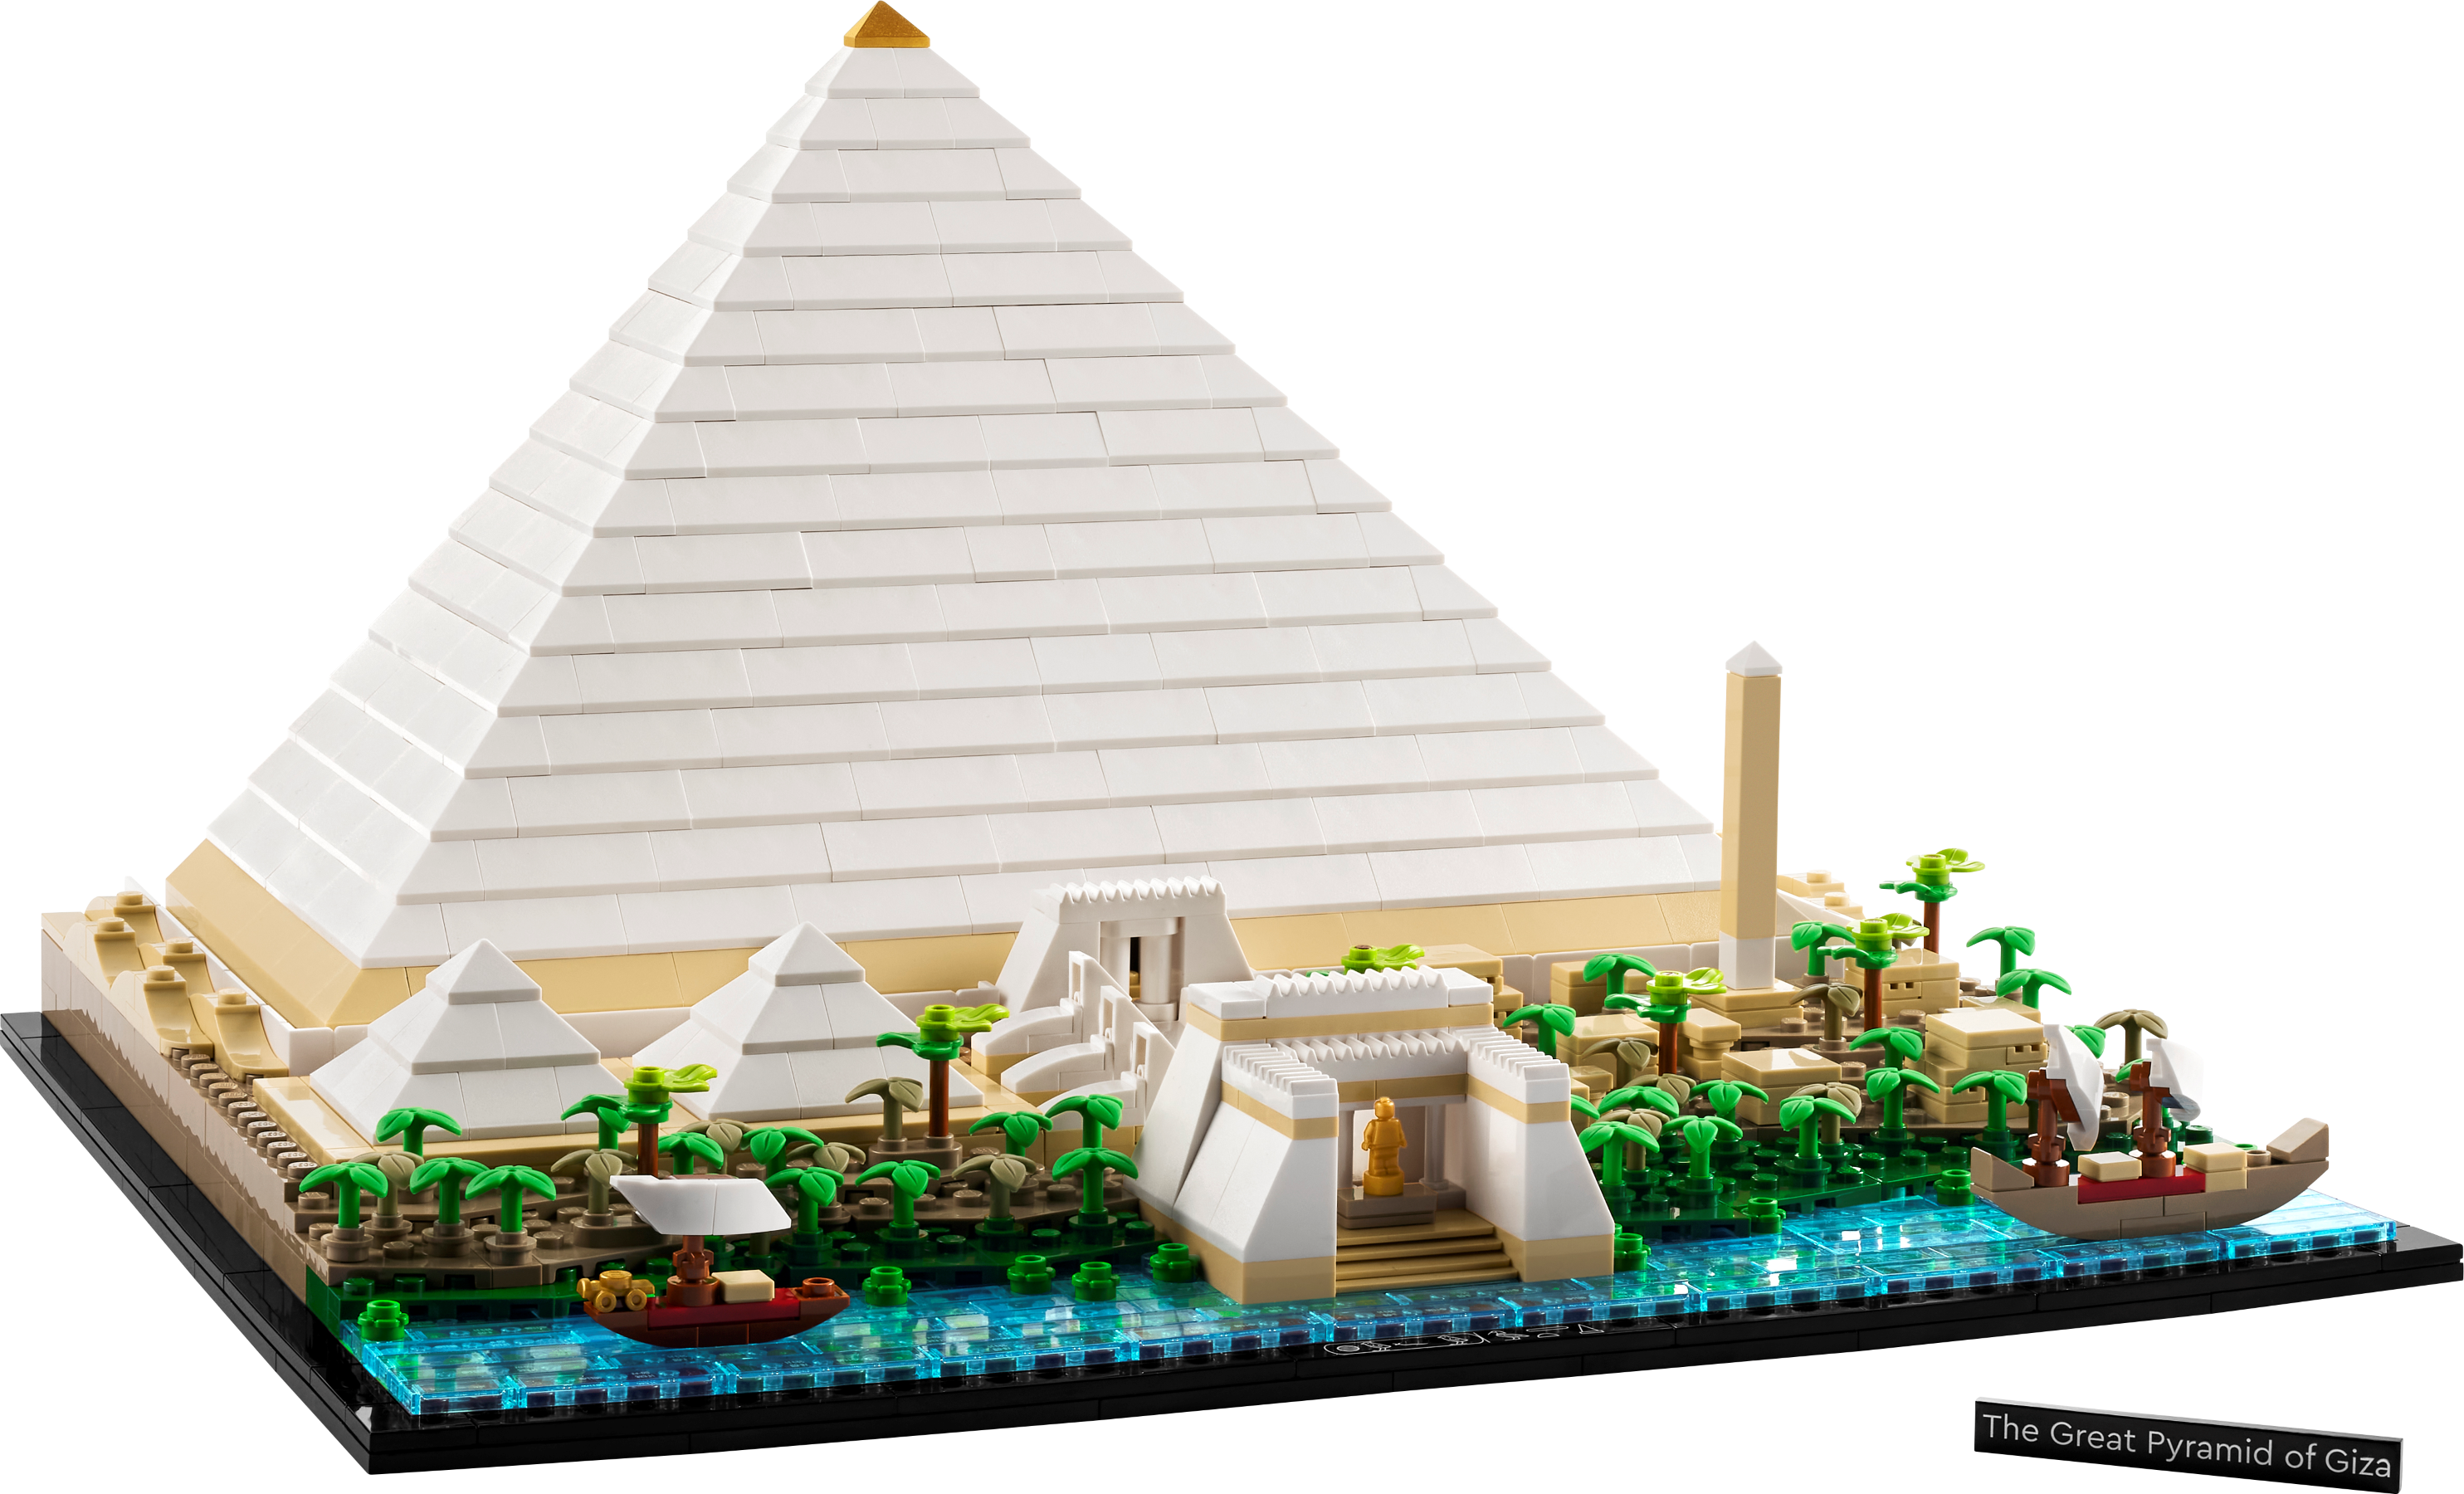  Lego Architecture : Toys & Games